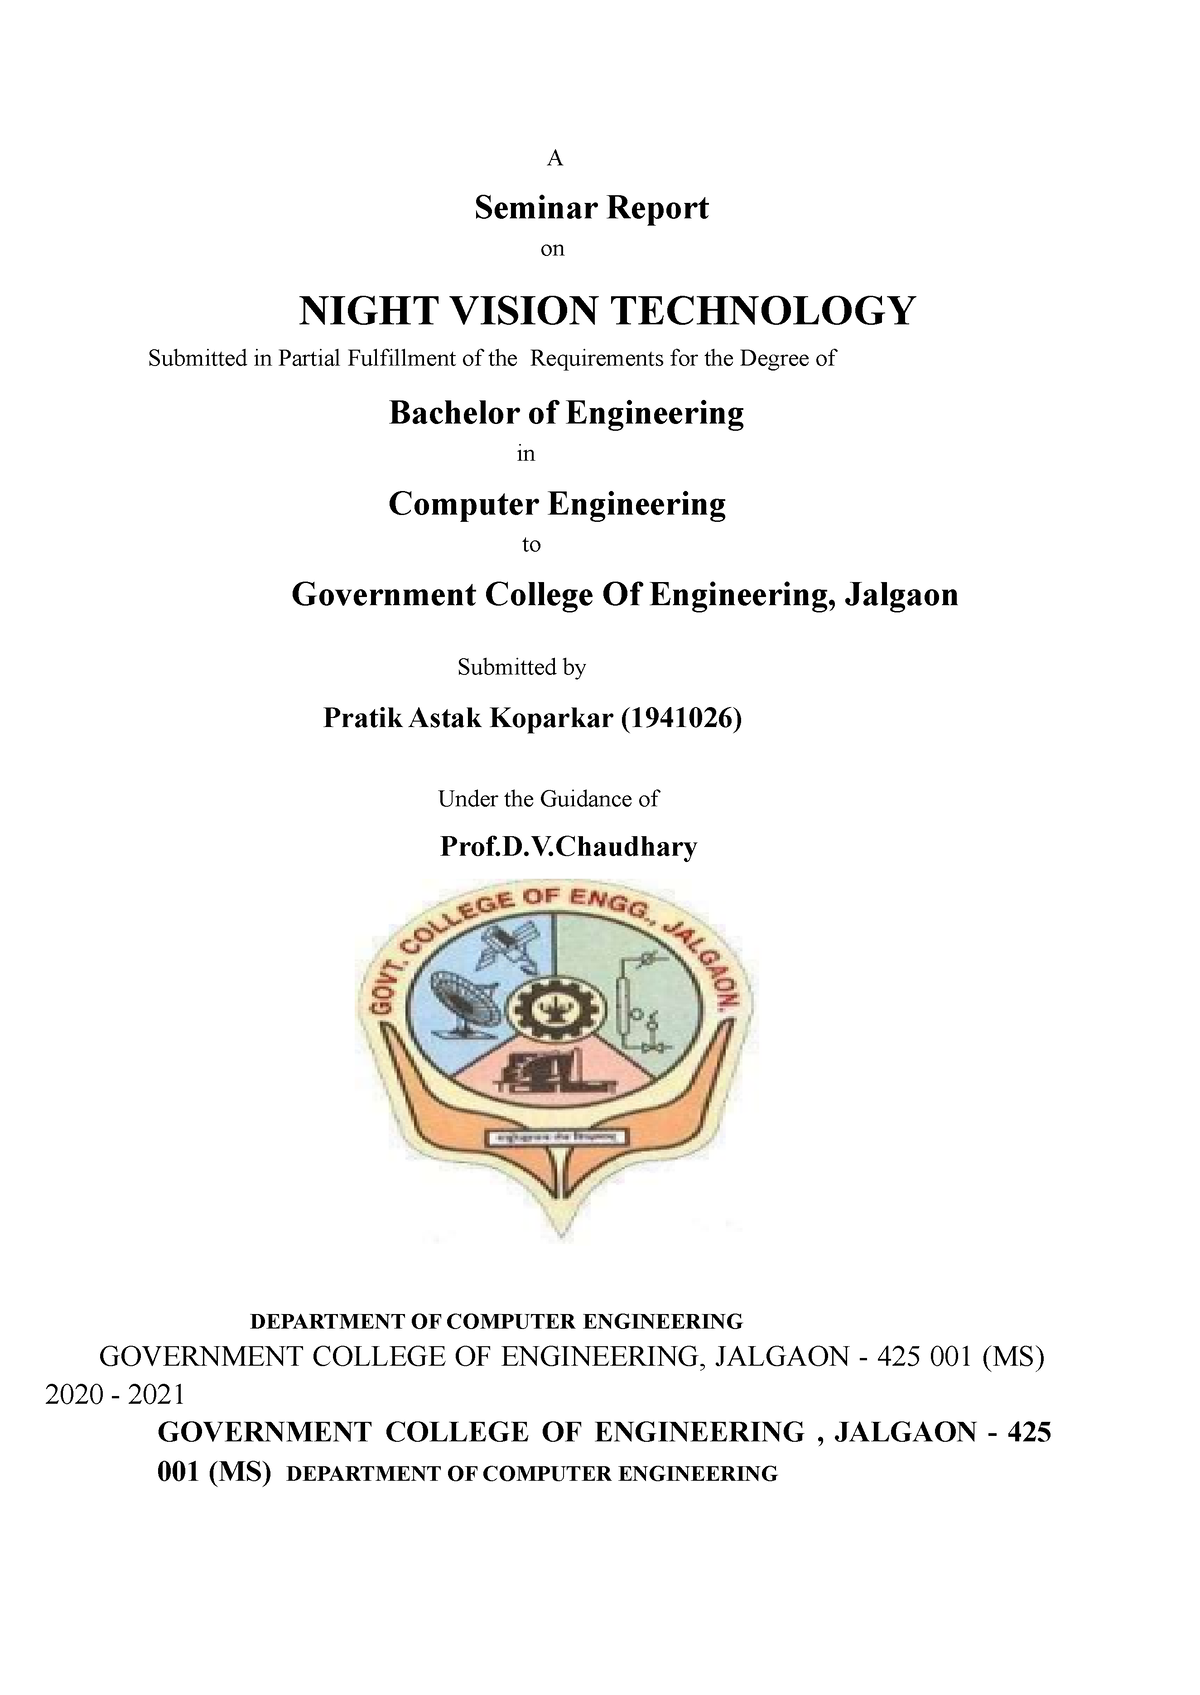 Night vision technology seminar report